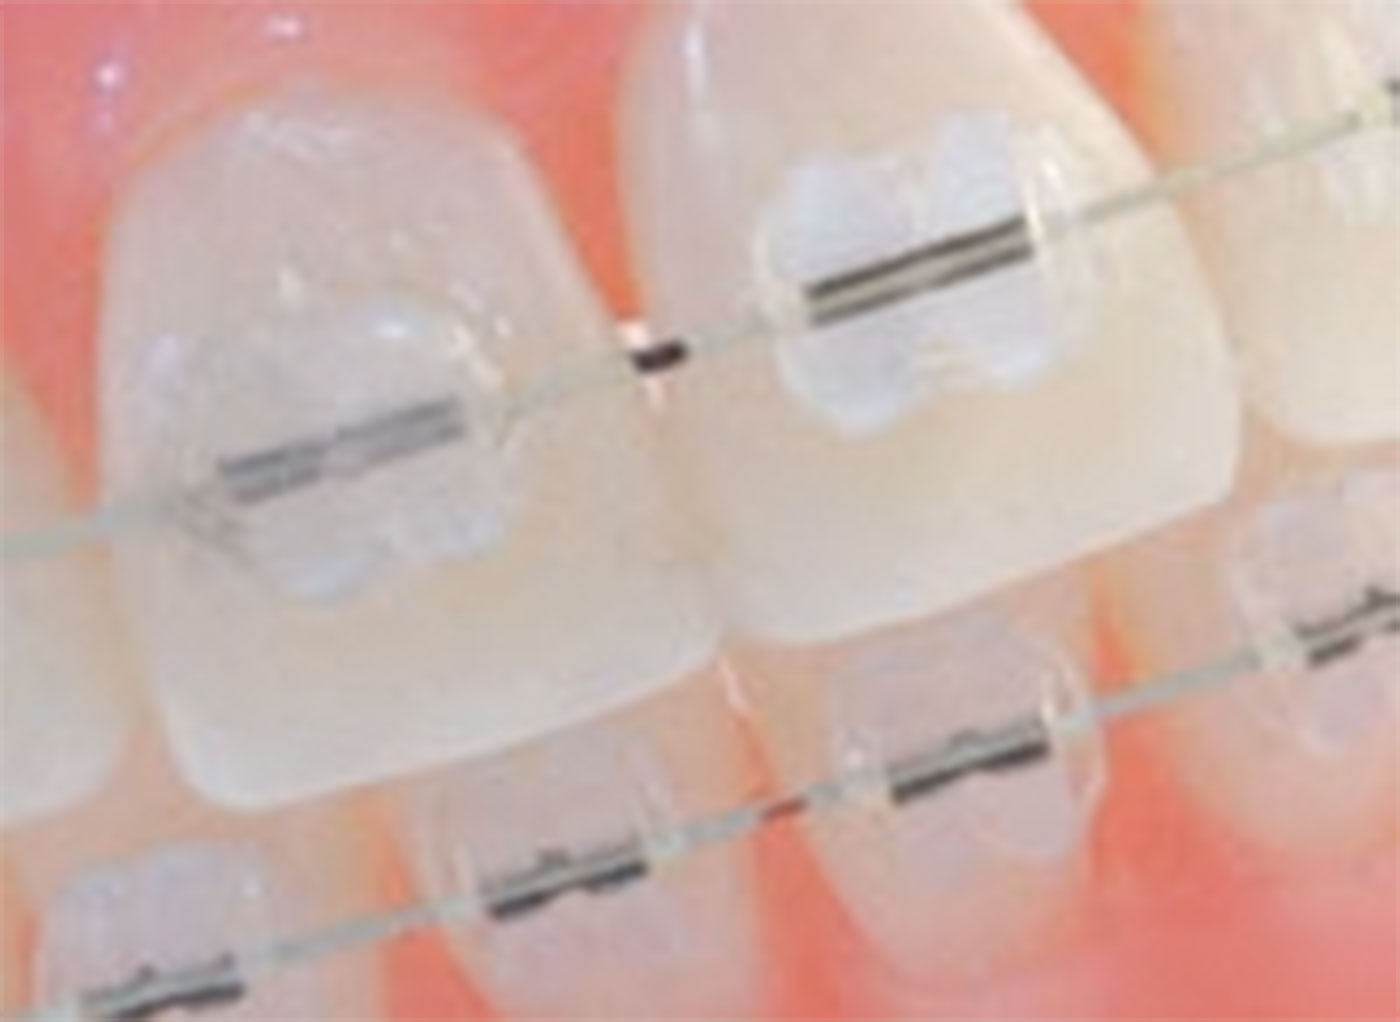 Ceramic orthodontic brackets